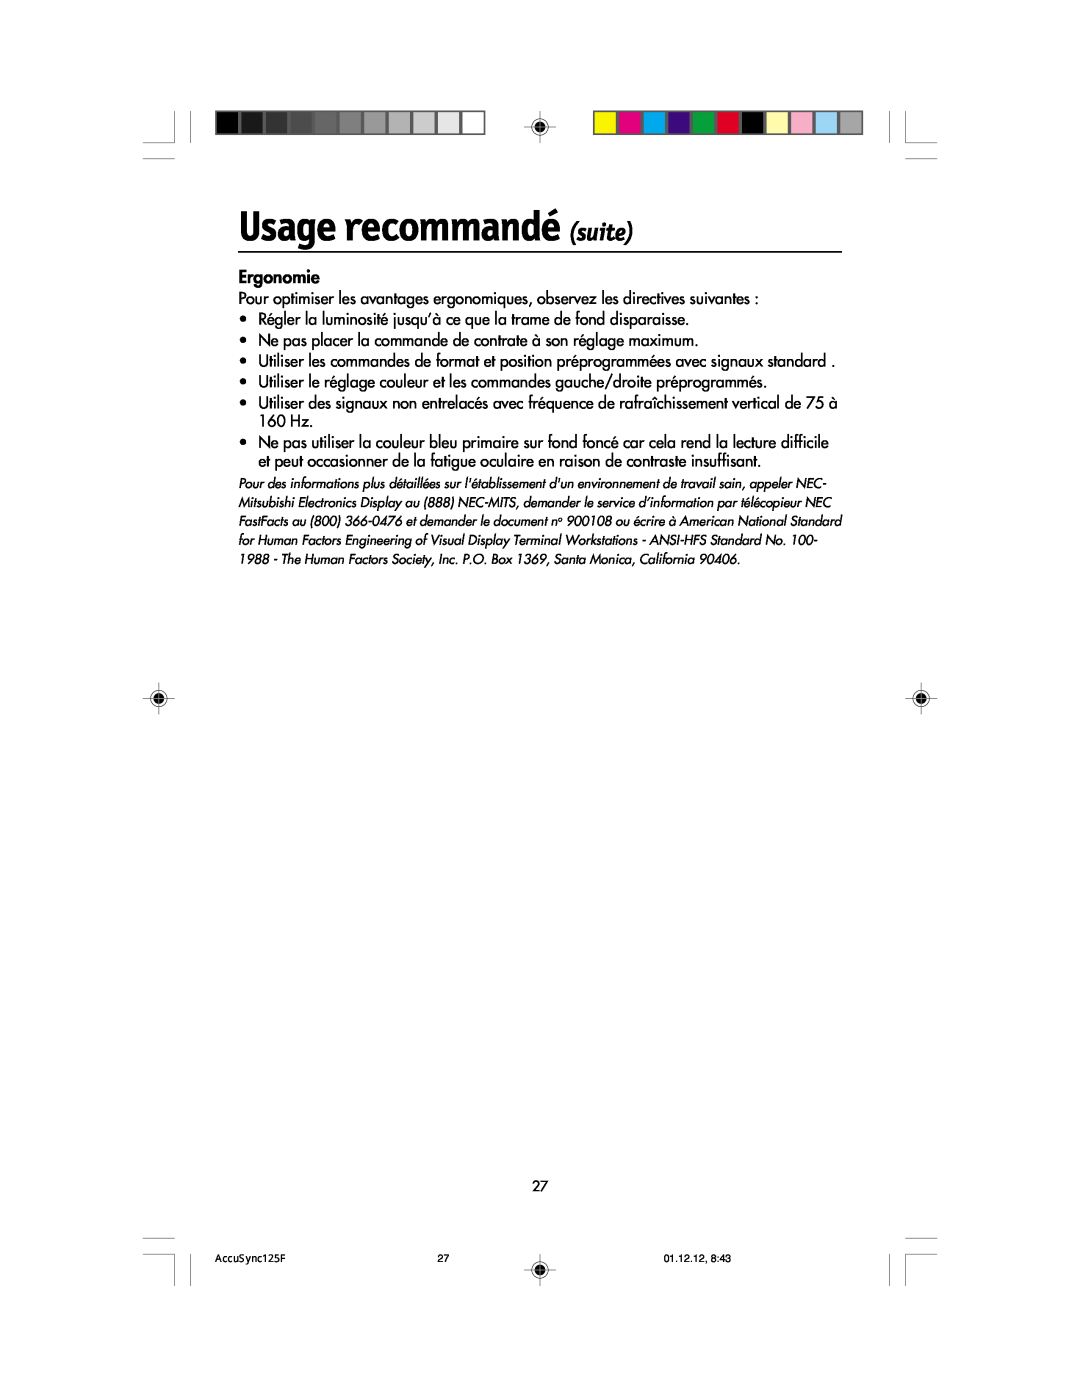 NEC 125F user manual Usage recommandé suite, Ergonomie 